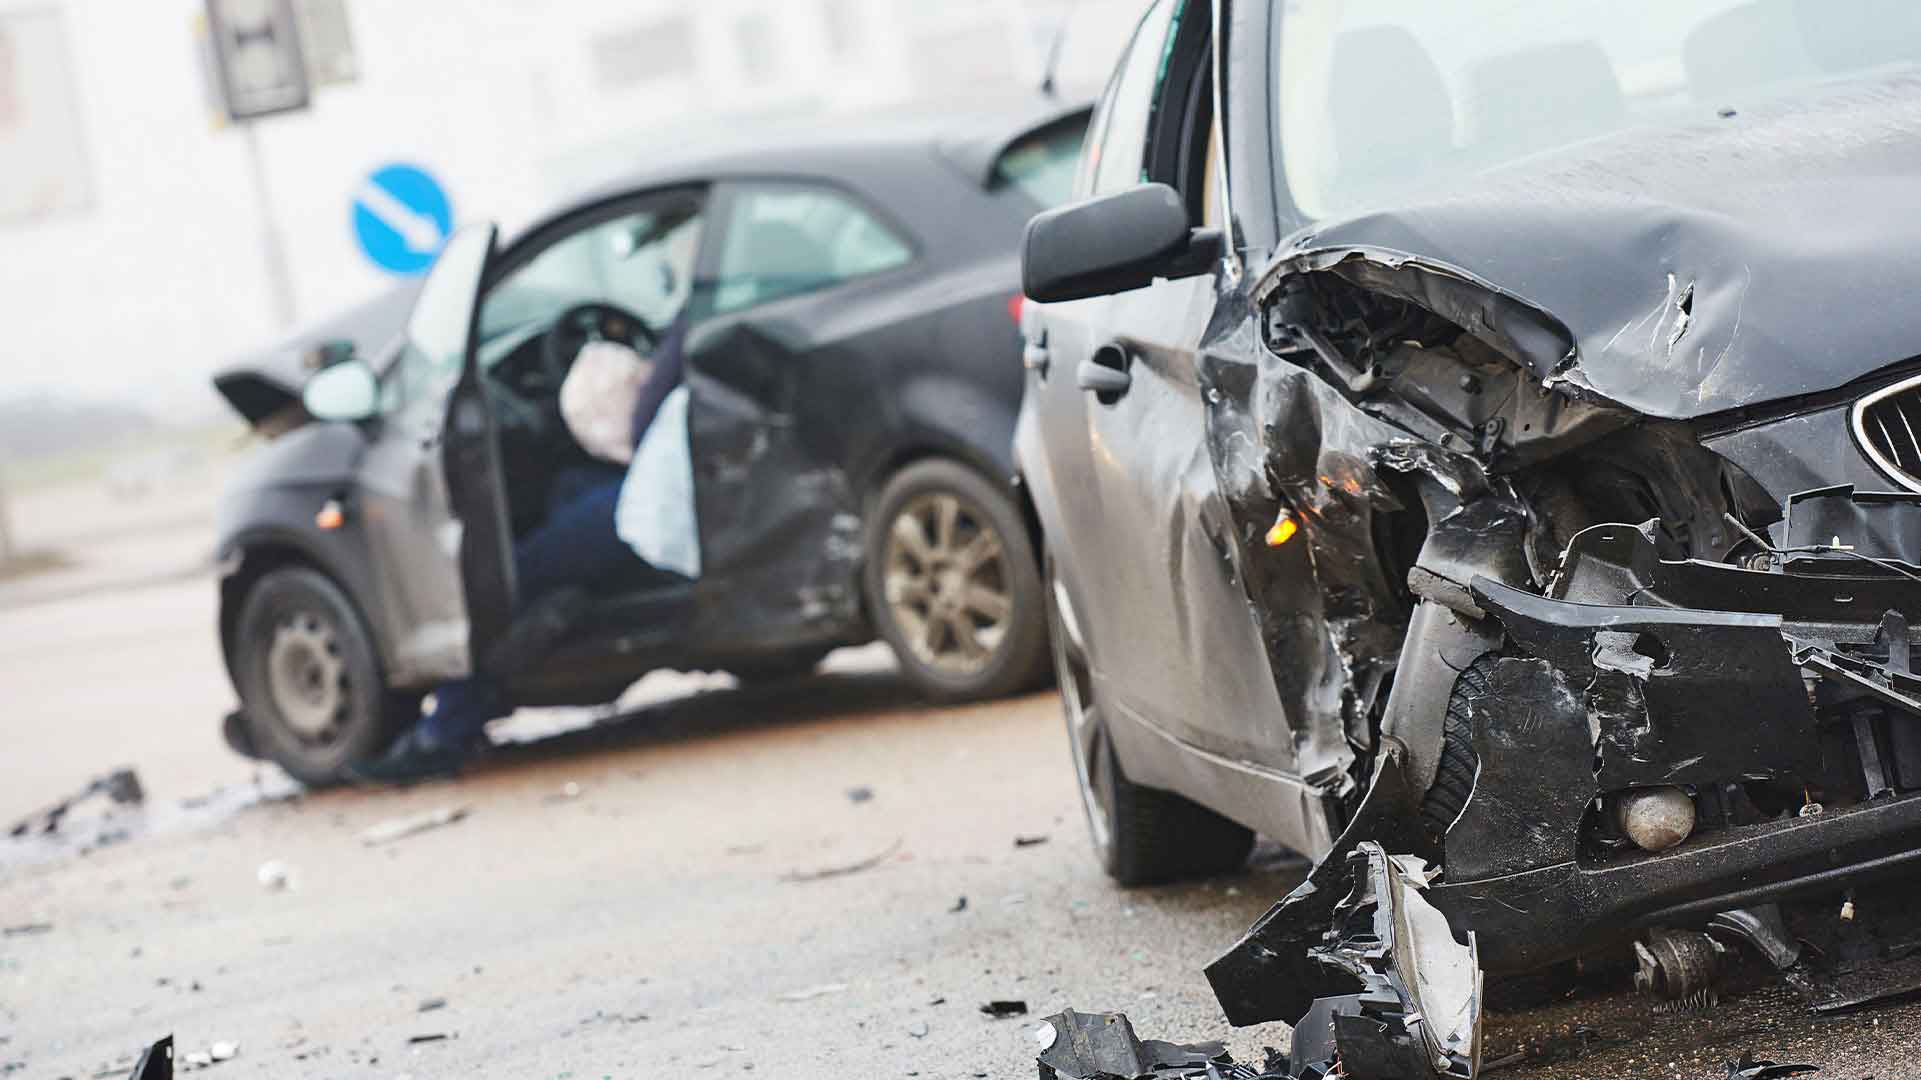 Best Car Accident Lawyer in Las Vegas - Paul Padda Law